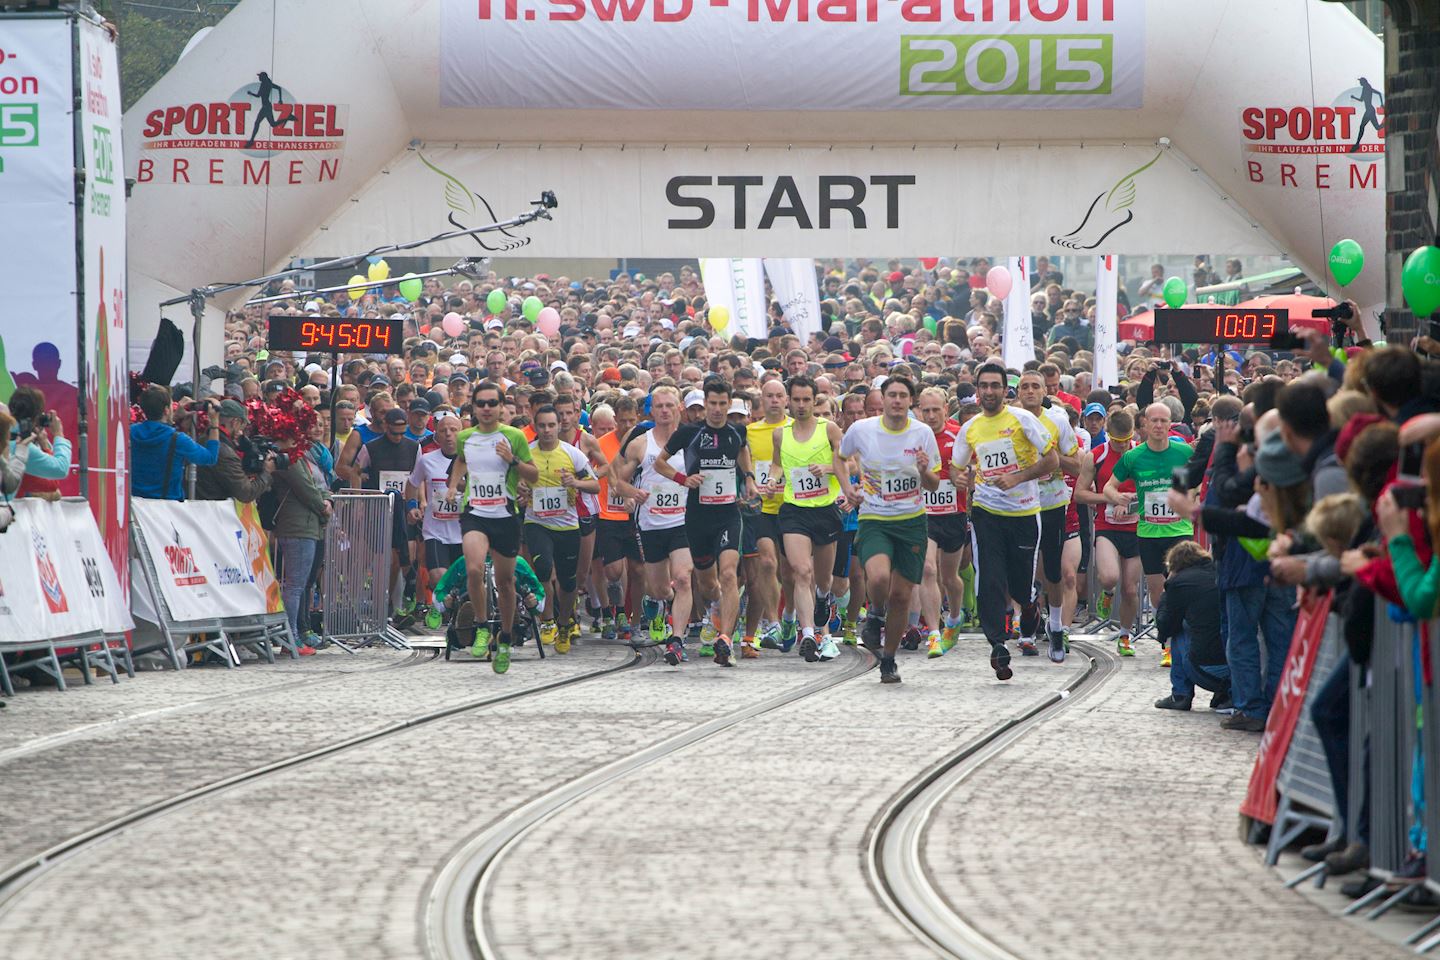 swb Marathon Bremen